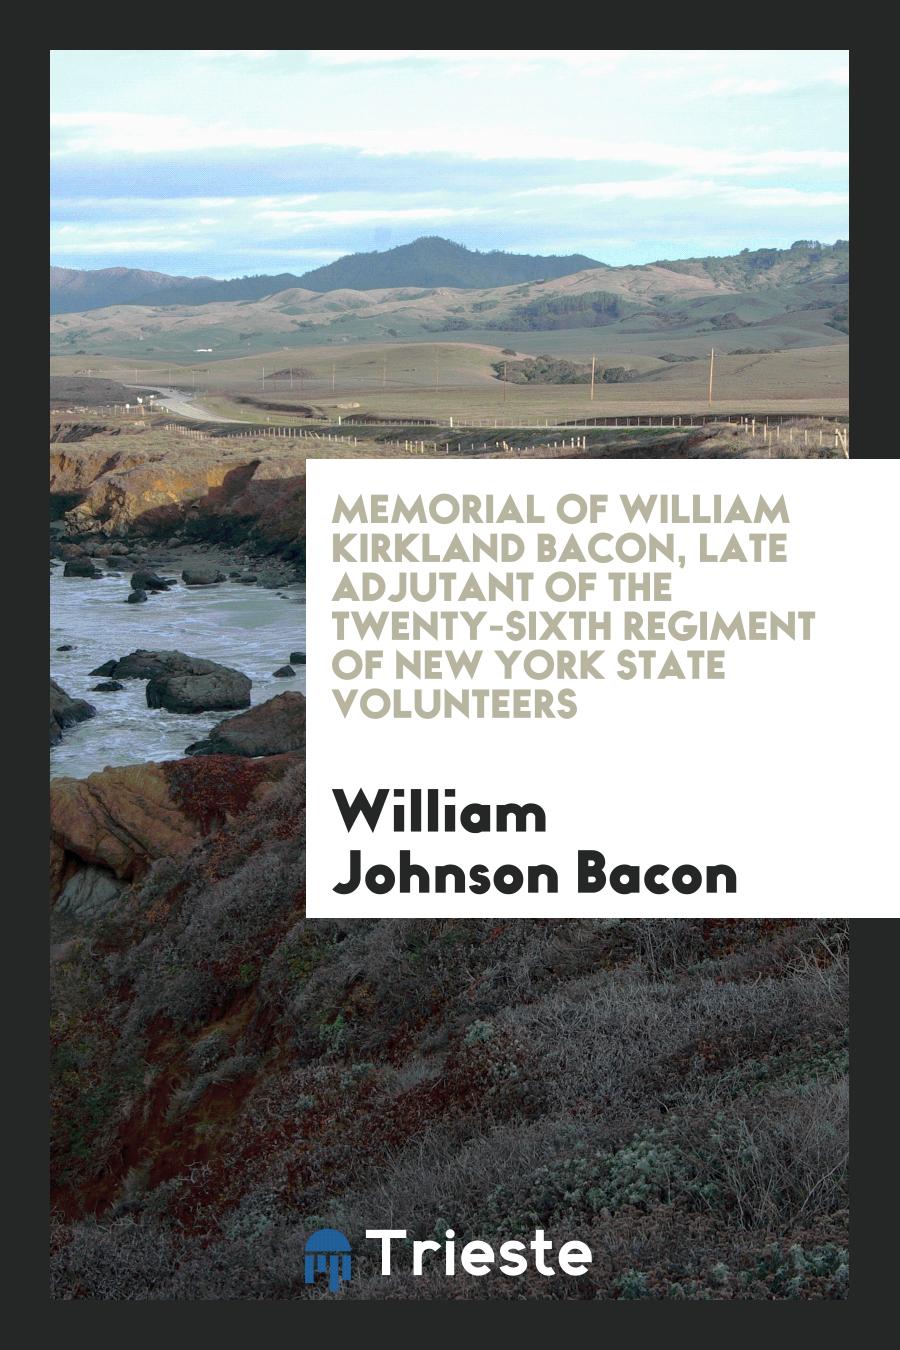 Memorial of William Kirkland Bacon, Late Adjutant of the Twenty-Sixth Regiment of New York State Volunteers